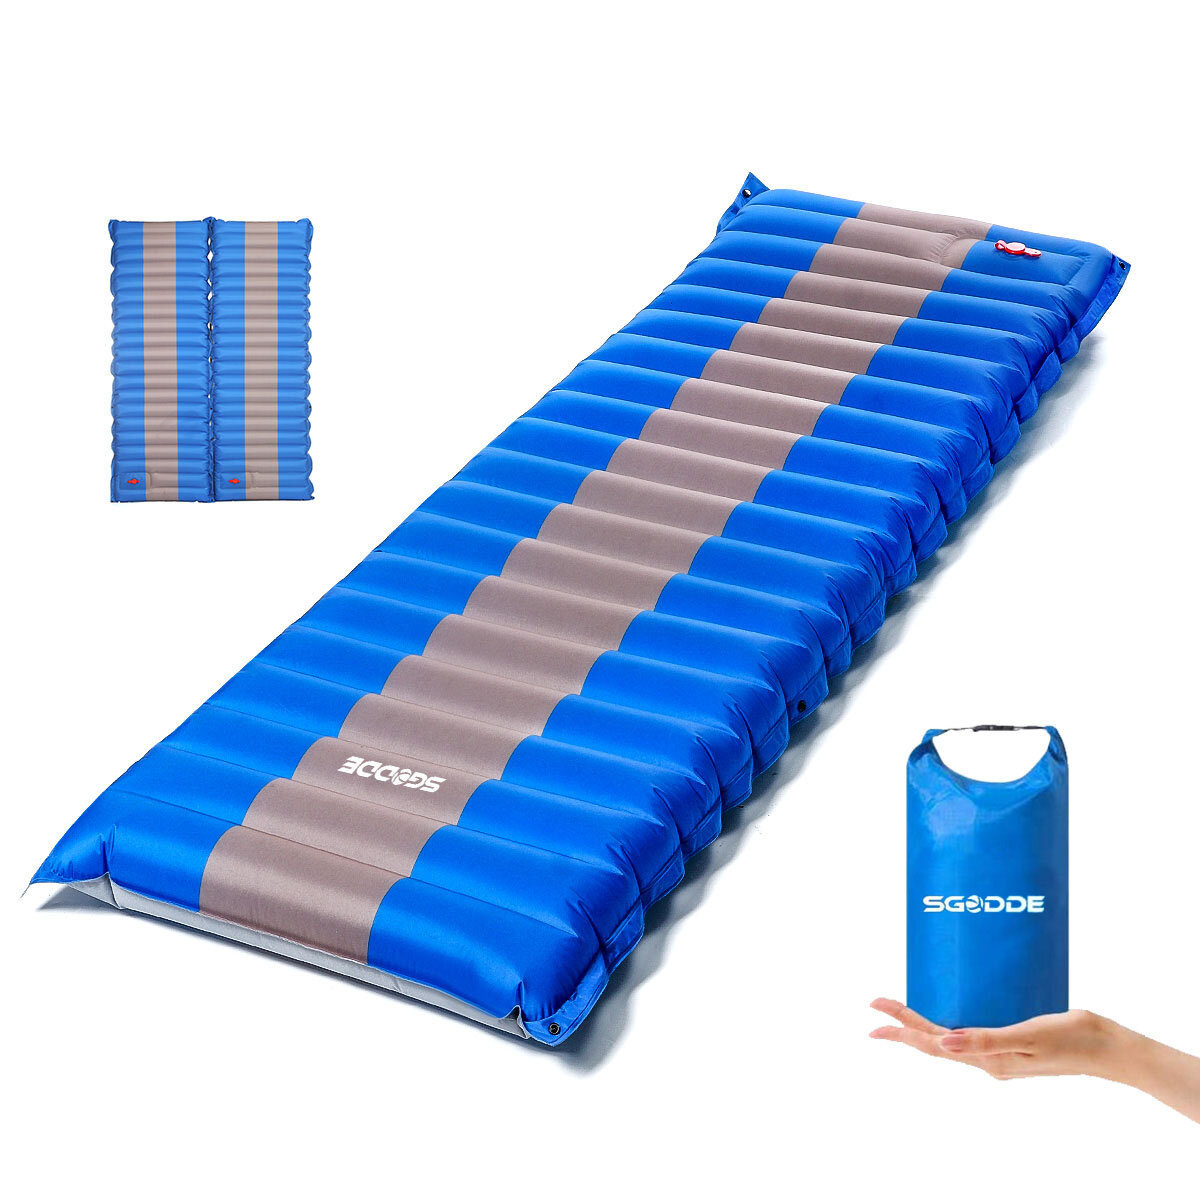 SGODDE Inflating Sleeping Pad Folding Portable Waterproof Spliceable Air Mattress Camping Travel Beach